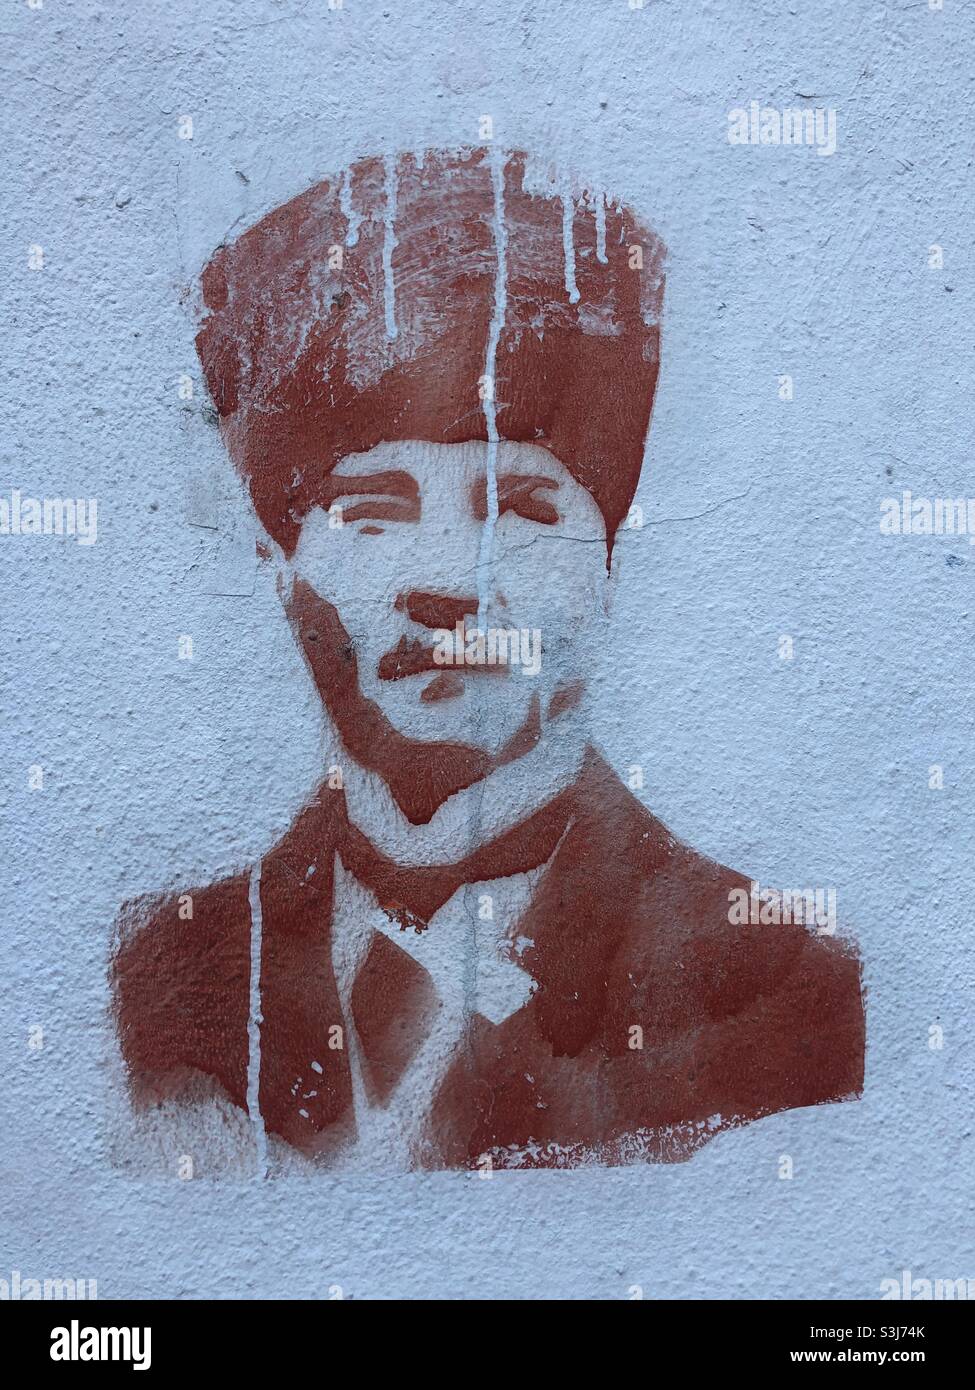 Mural portrait of  Mustafa Kemal Ataturk the founder of the Turkish Republic Stock Photo